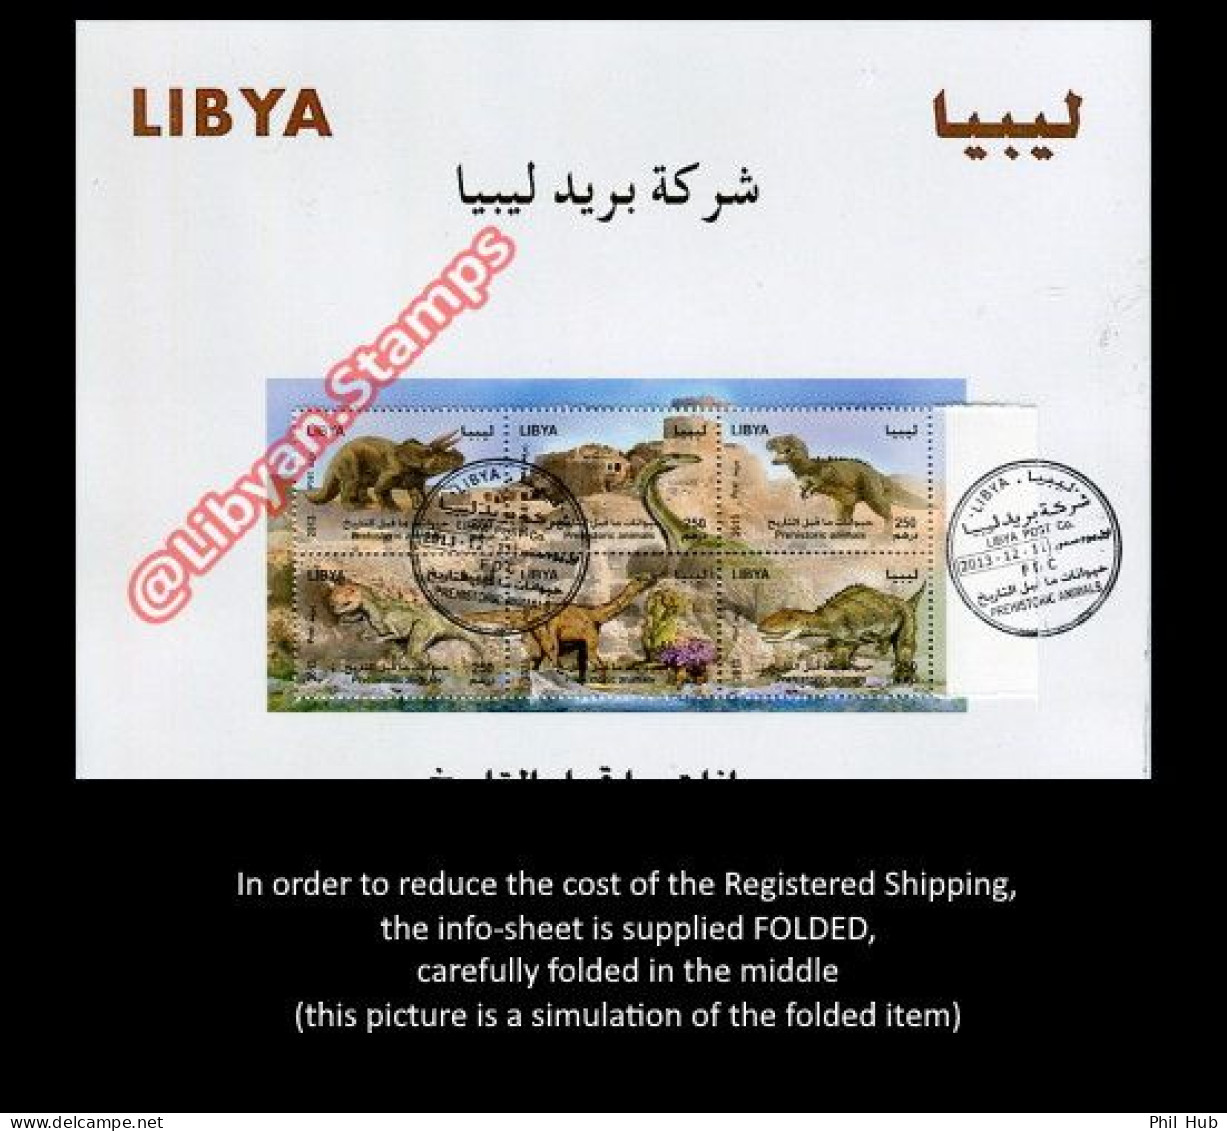 LIBYA 2013 Dinosaurs (Libya Post INFO-SHEET With Stamps PMK) SUPPLIED FOLDED - Prehistorisch